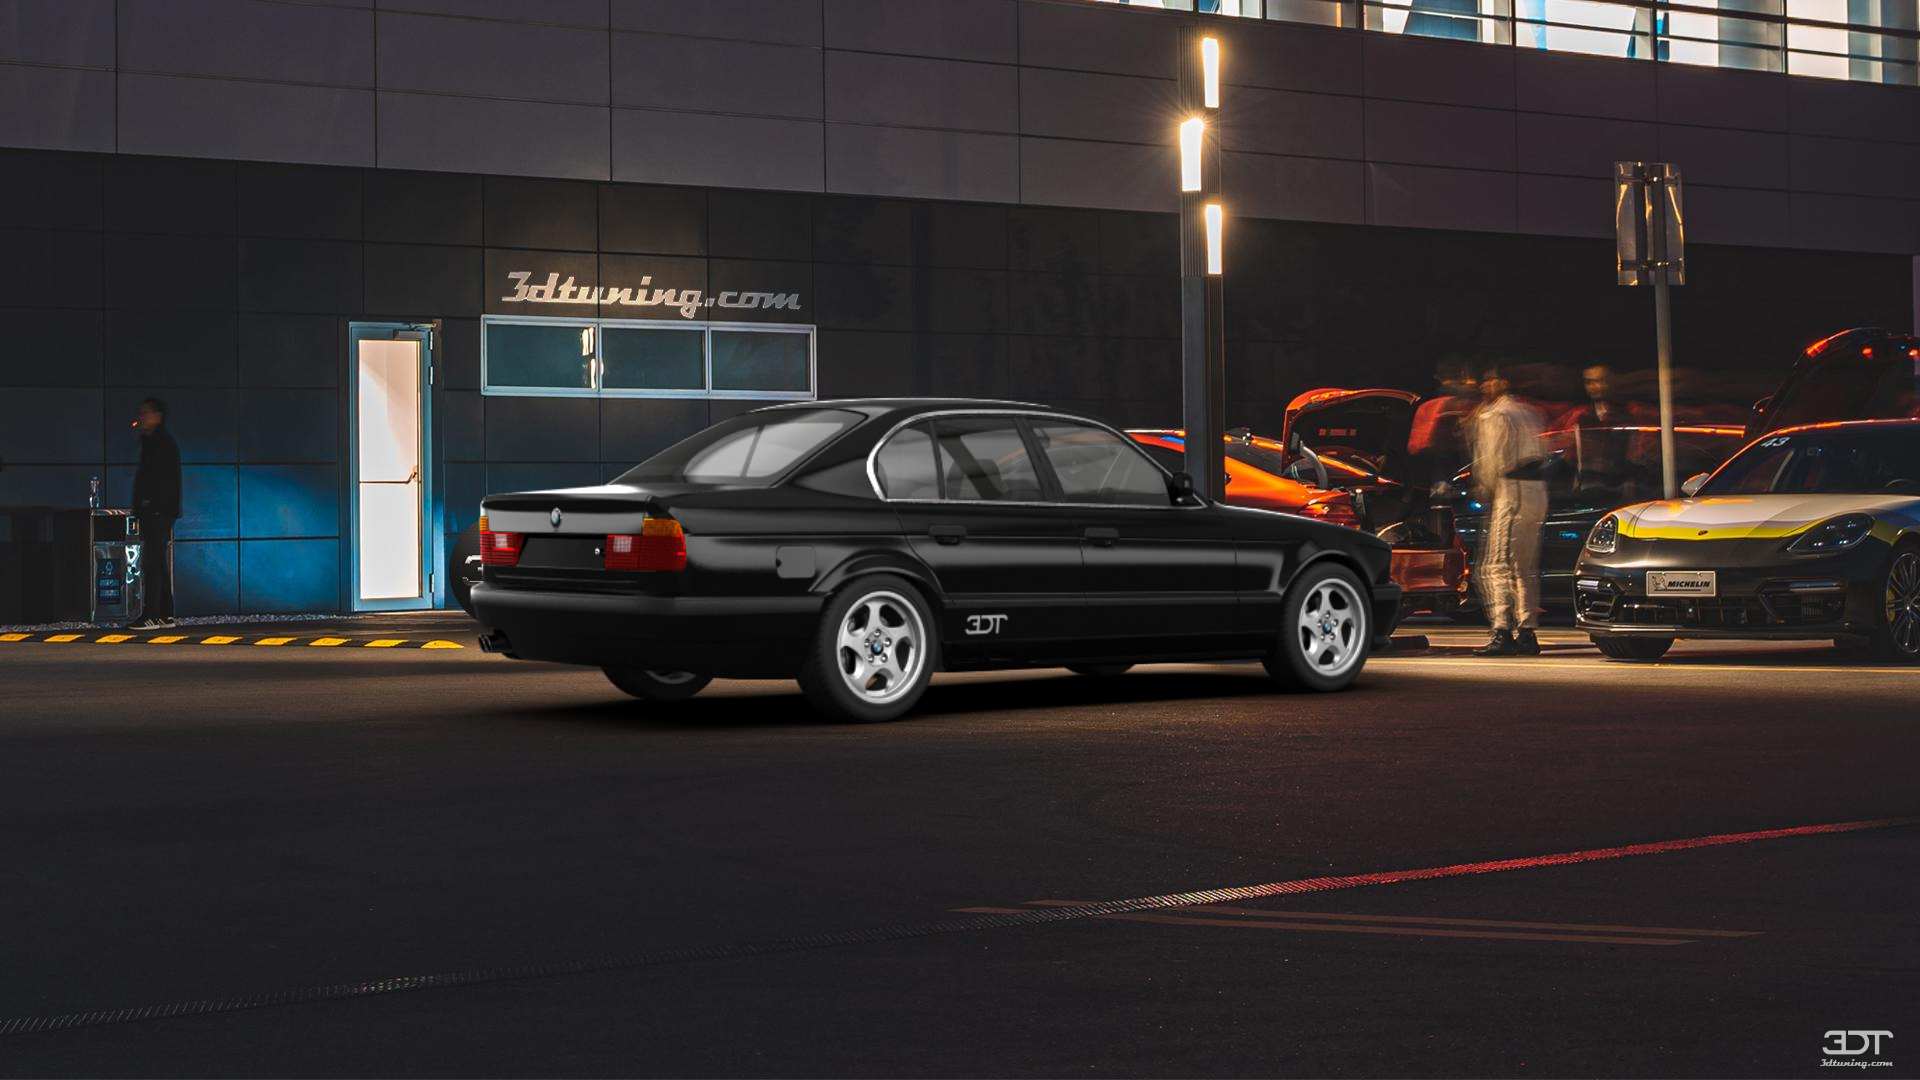 BMW 5 Series Sedan 1987 tuning